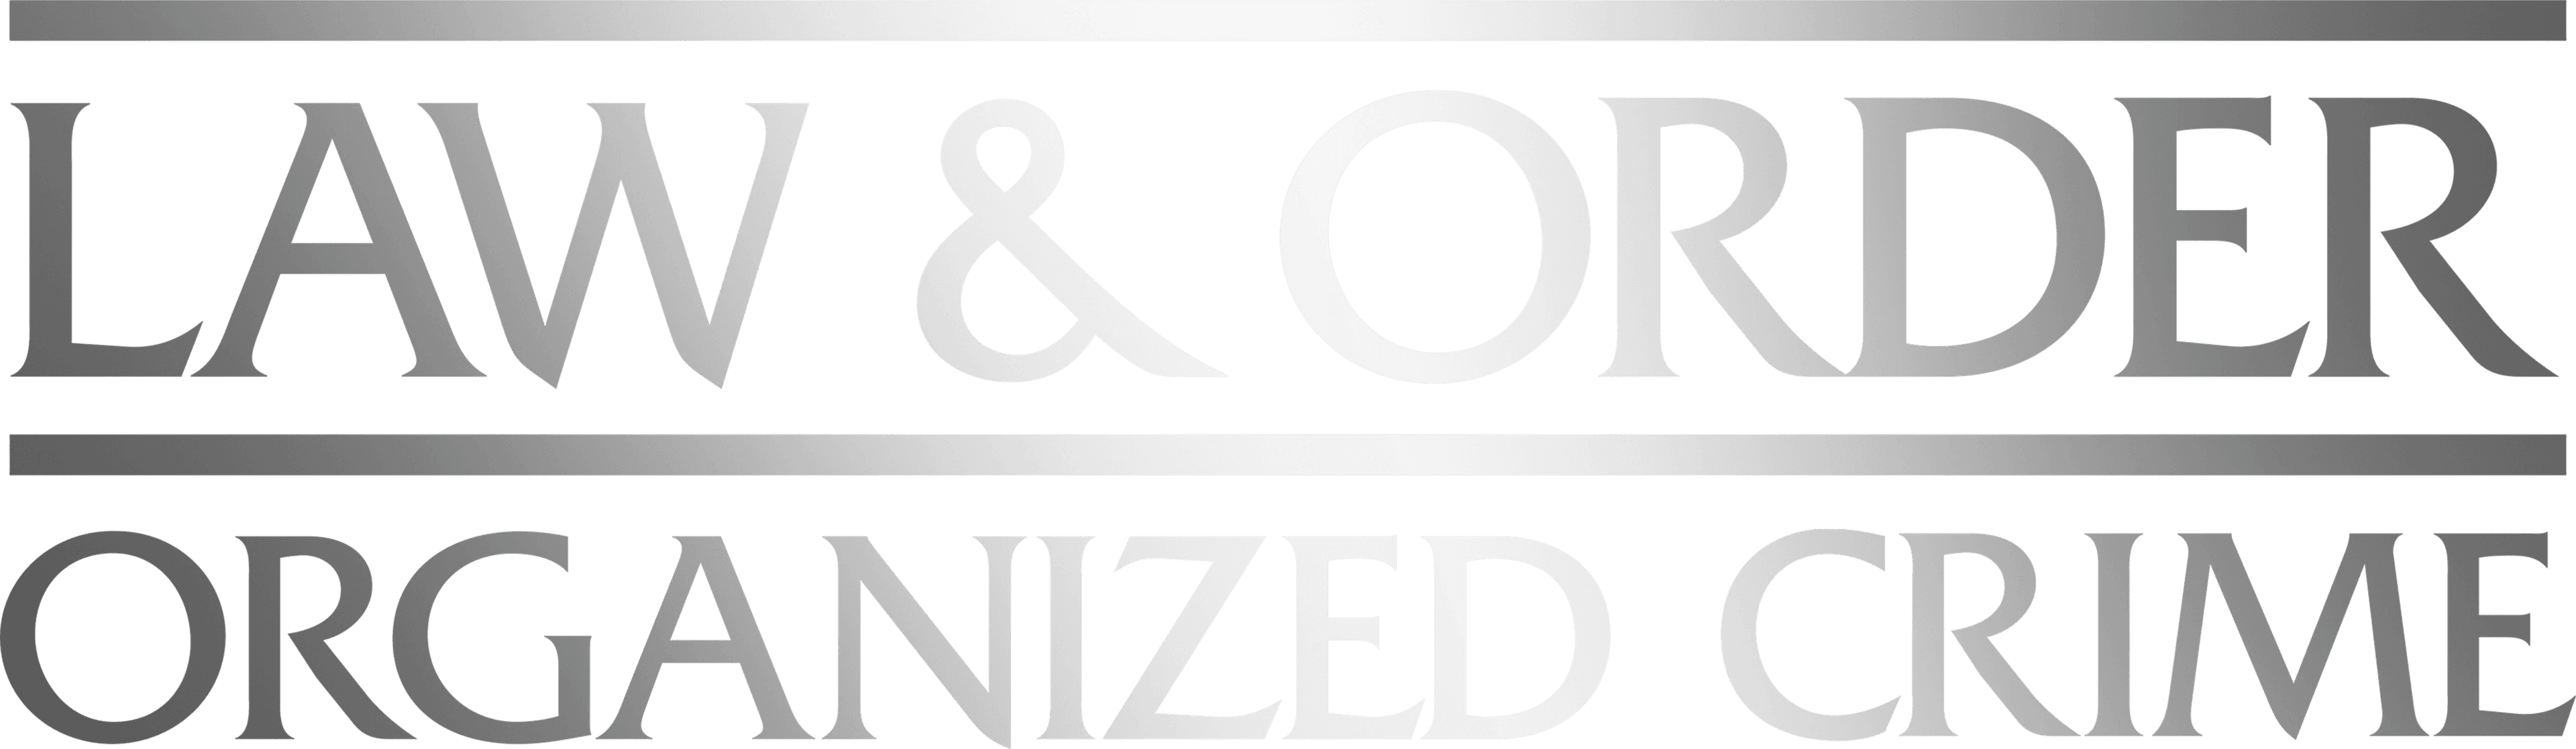 Law & Order: Organized Crime logo